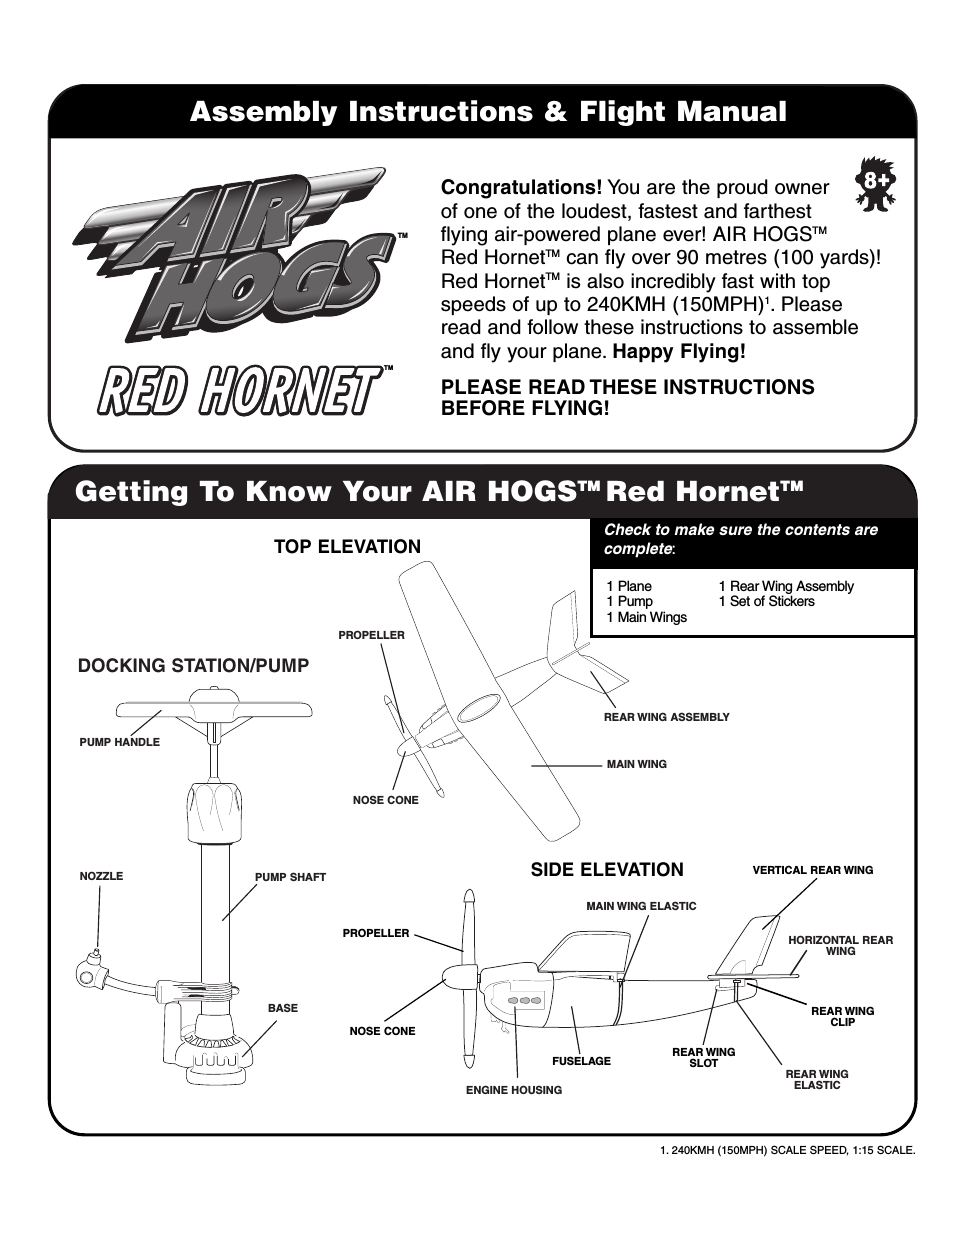 Air Hogs Red Hornet